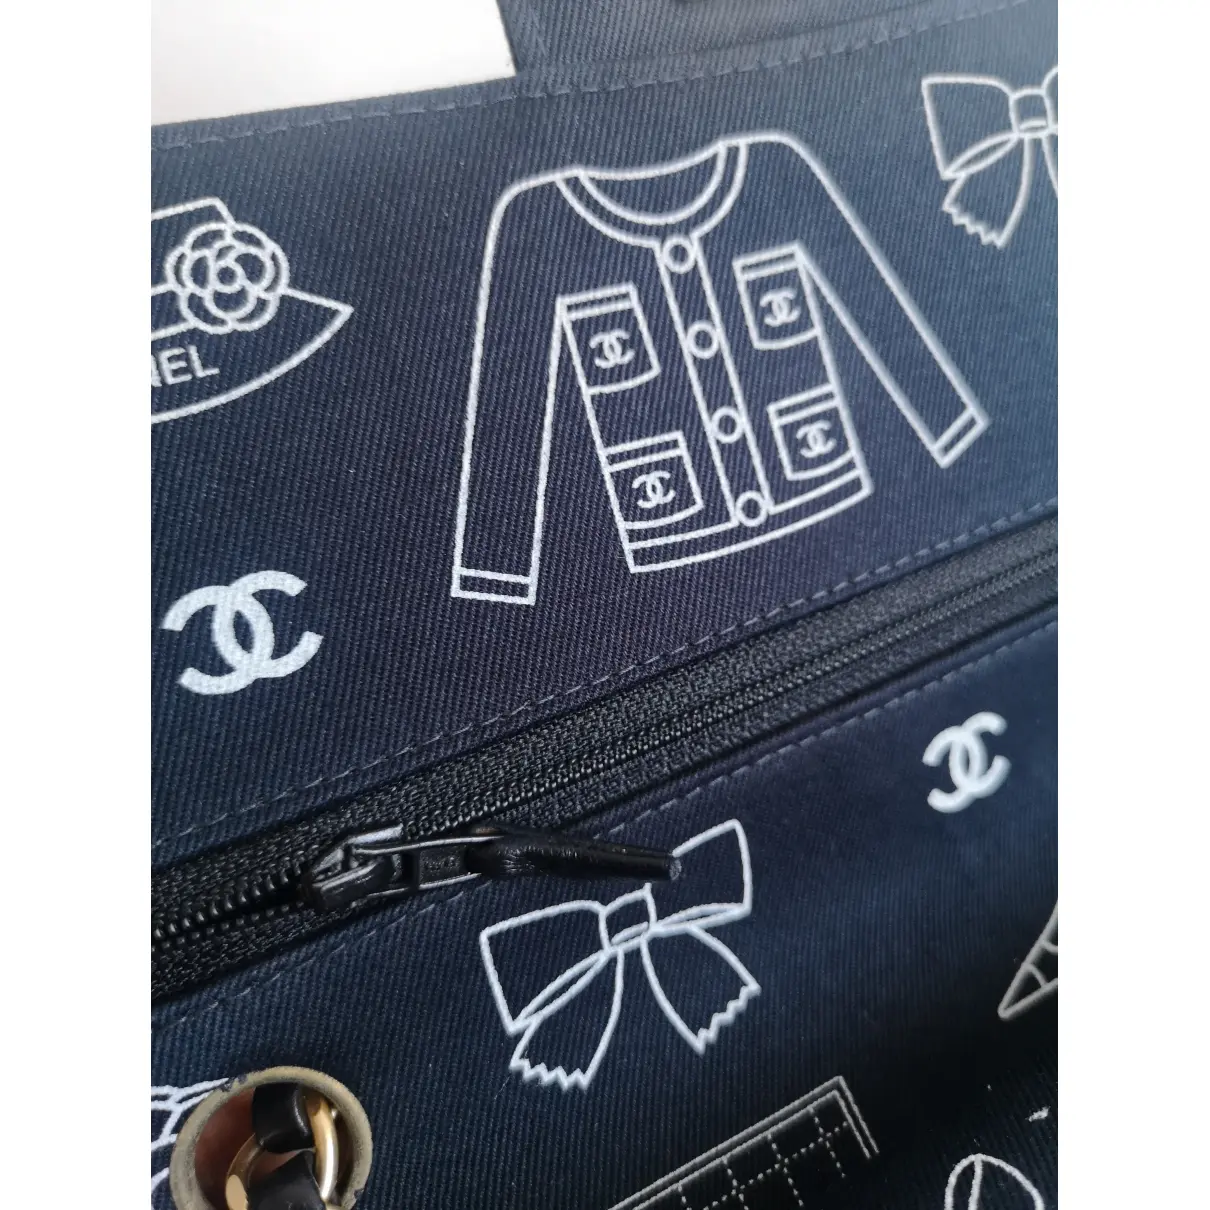 Timeless/Classique handbag Chanel - Vintage